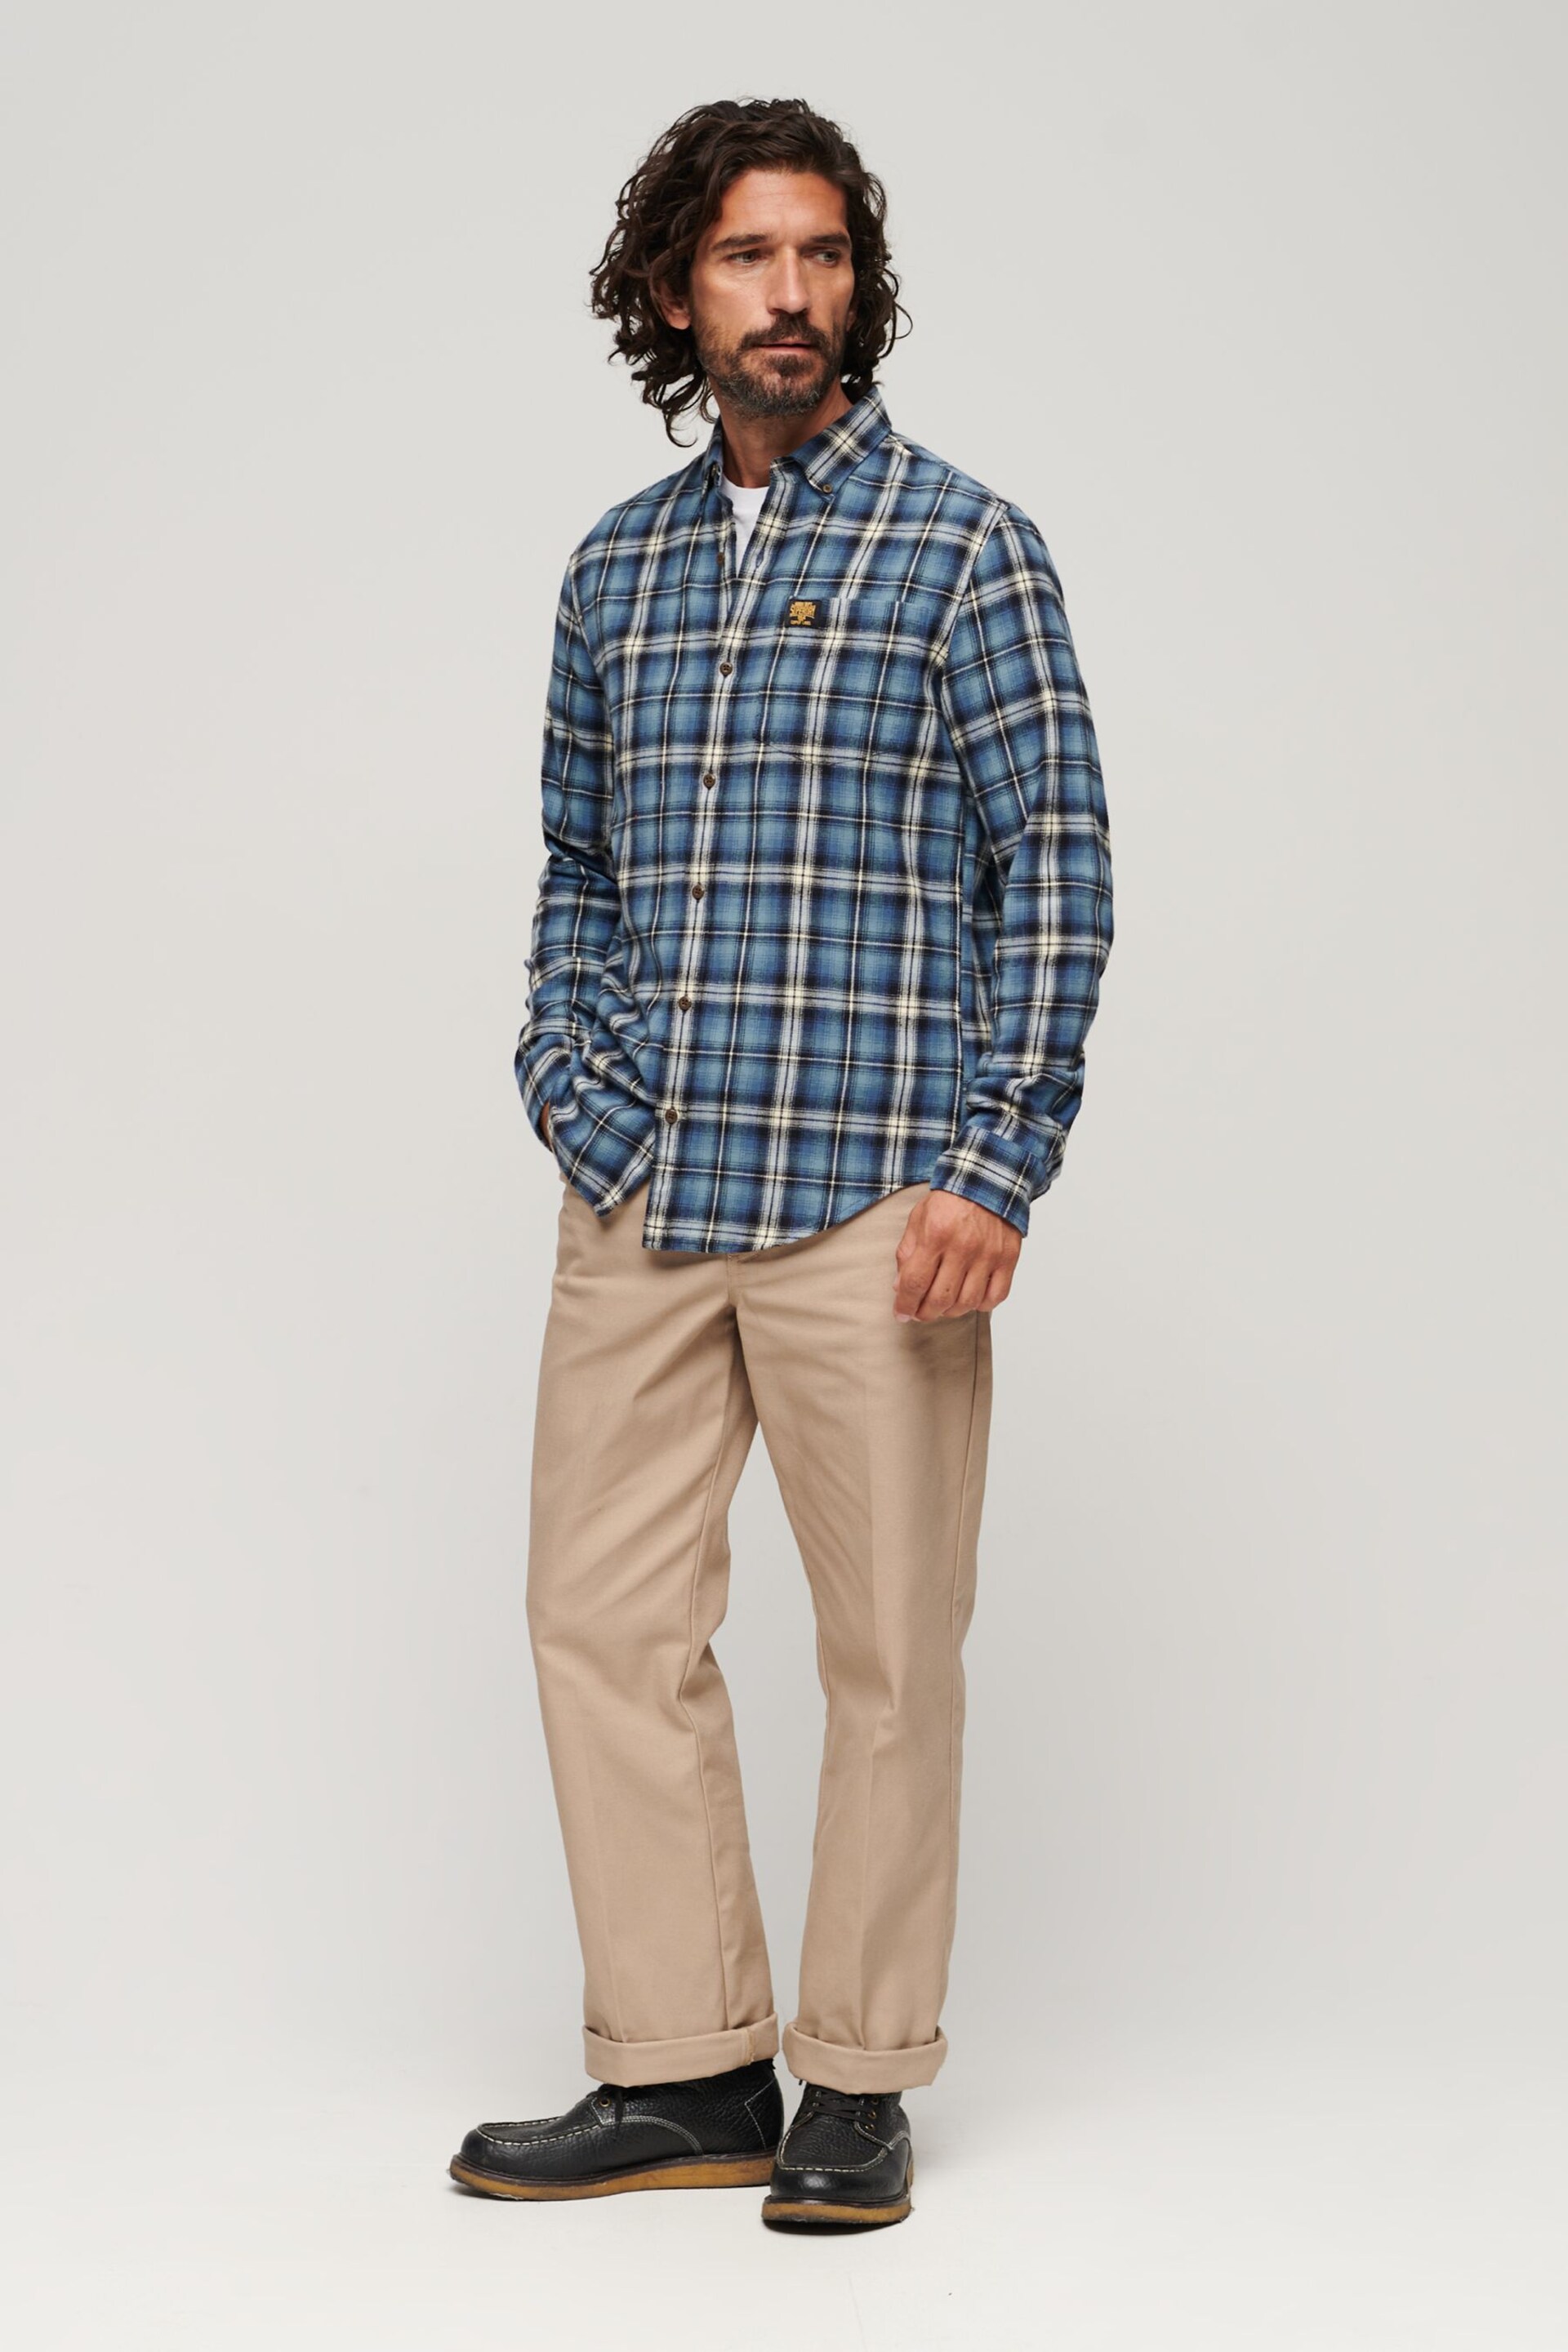 Superdry Blue Long Sleeve Cotton Lumberjack Shirt - Image 3 of 9